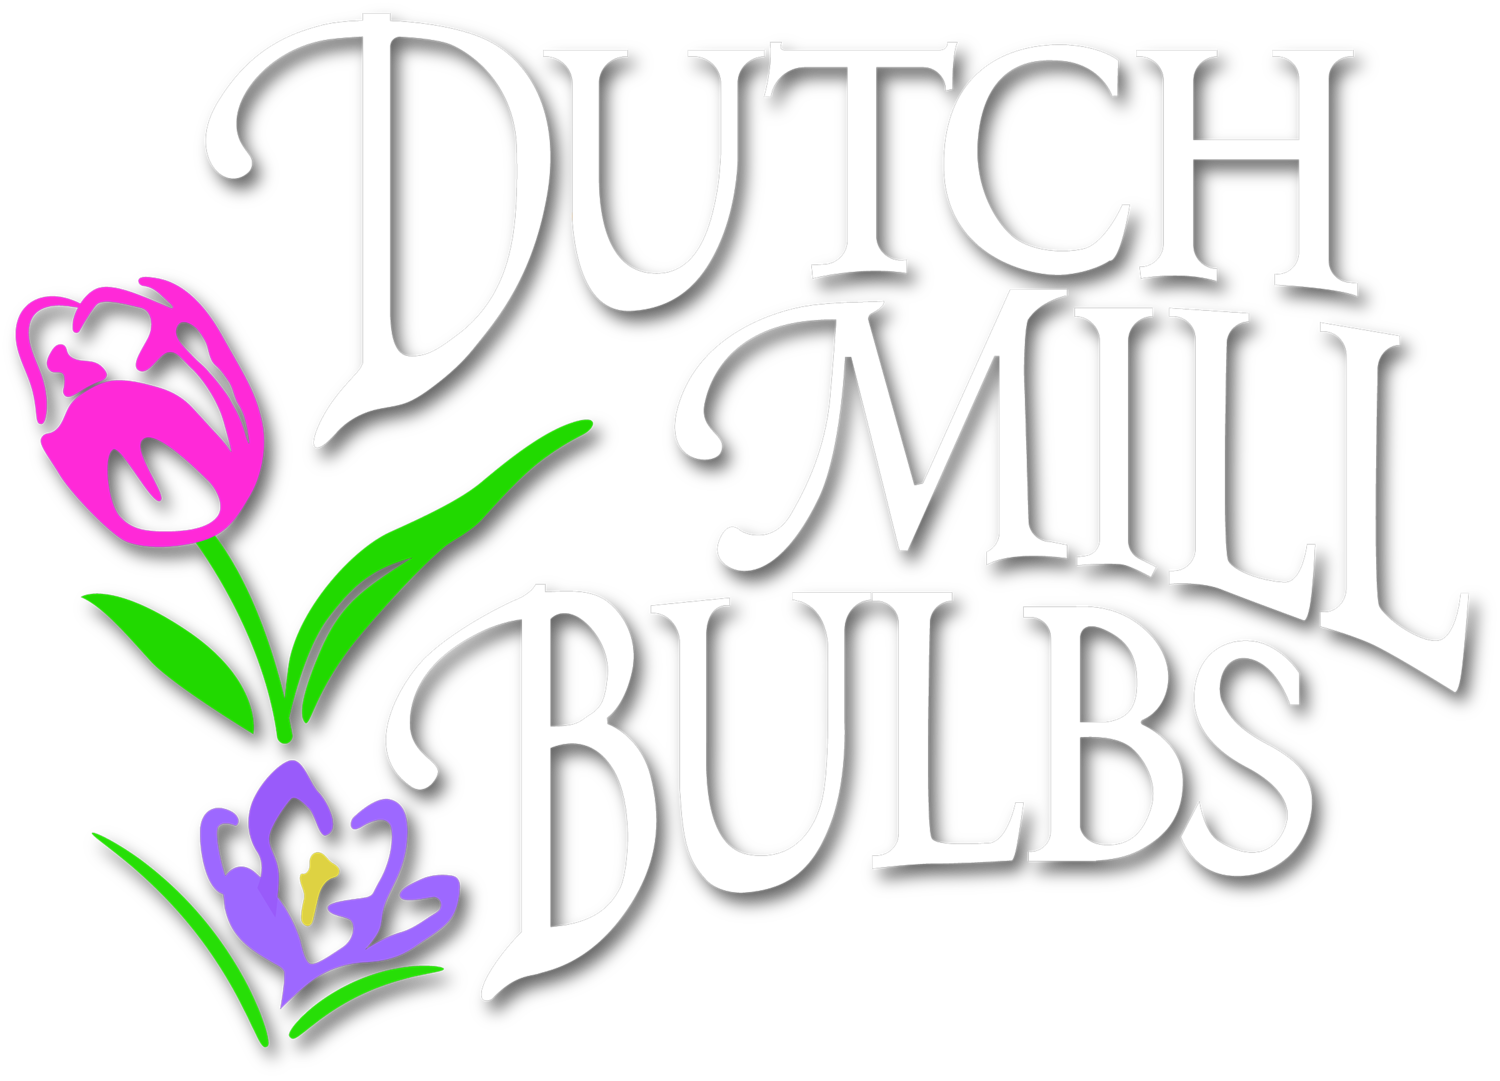 Dutch Mill Bulbs